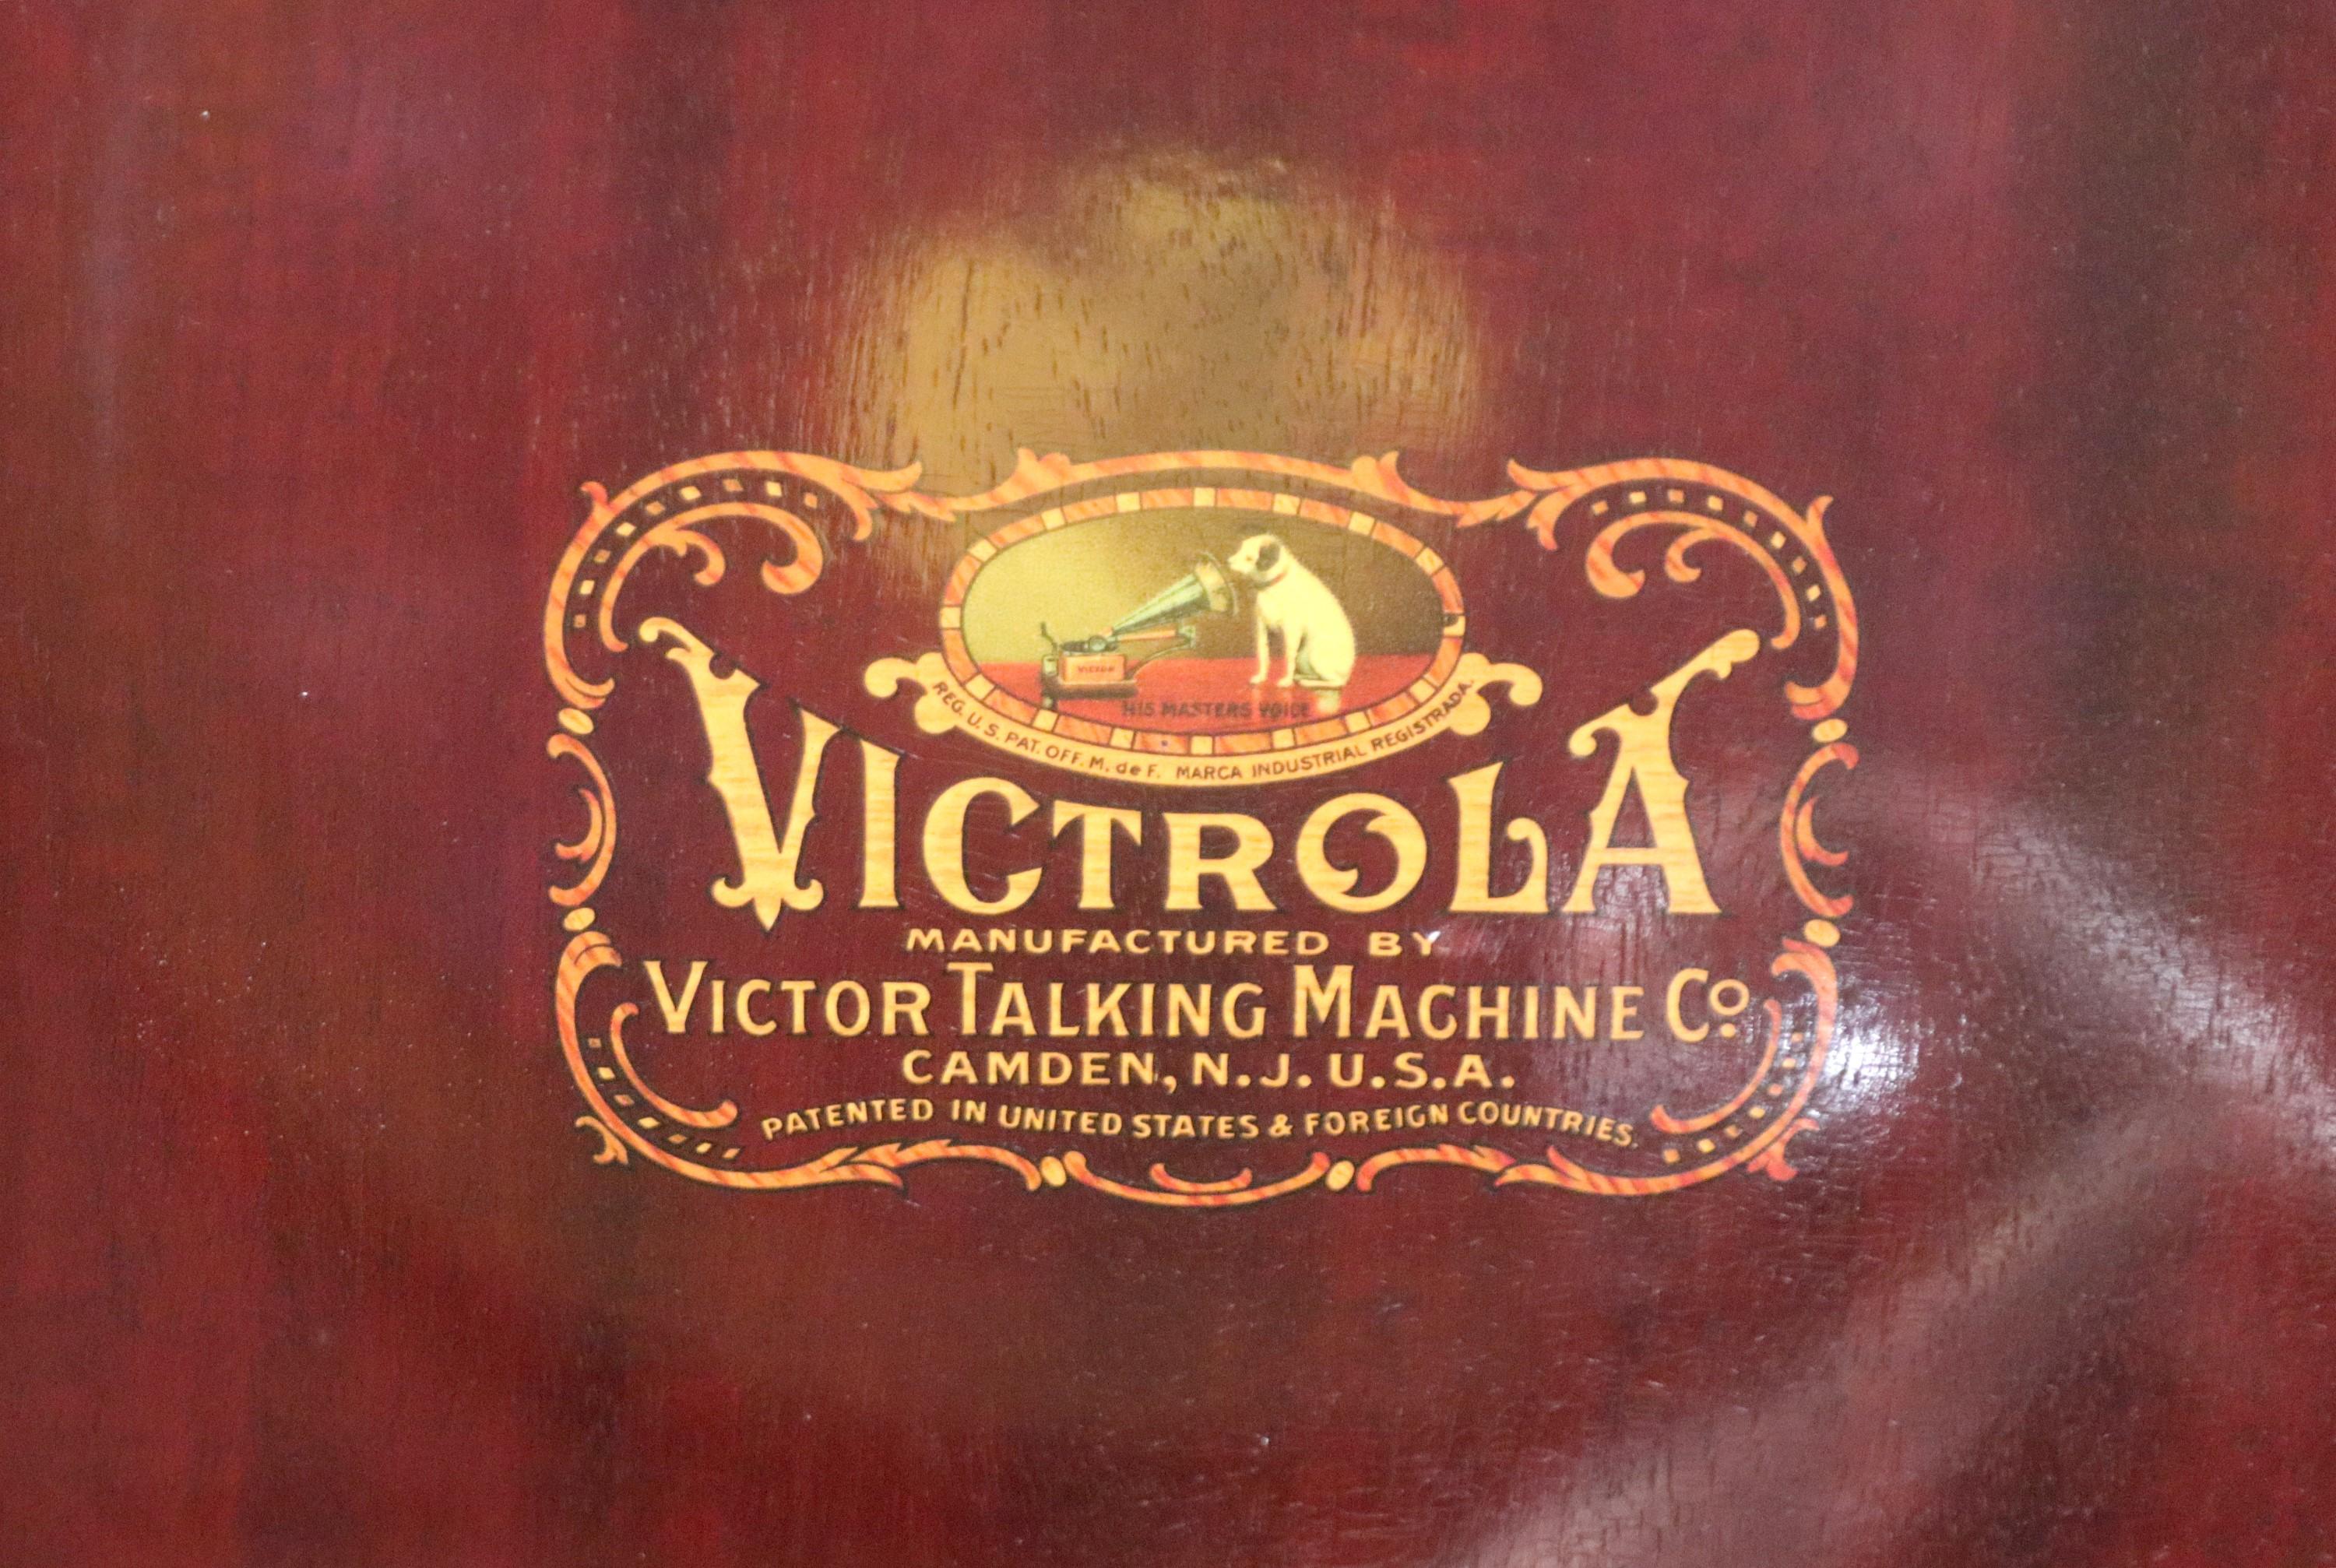 Victrola VV-X Bodenmodell Phonograph von The Victrola Talking Machine Co. (amerikanisch) im Angebot